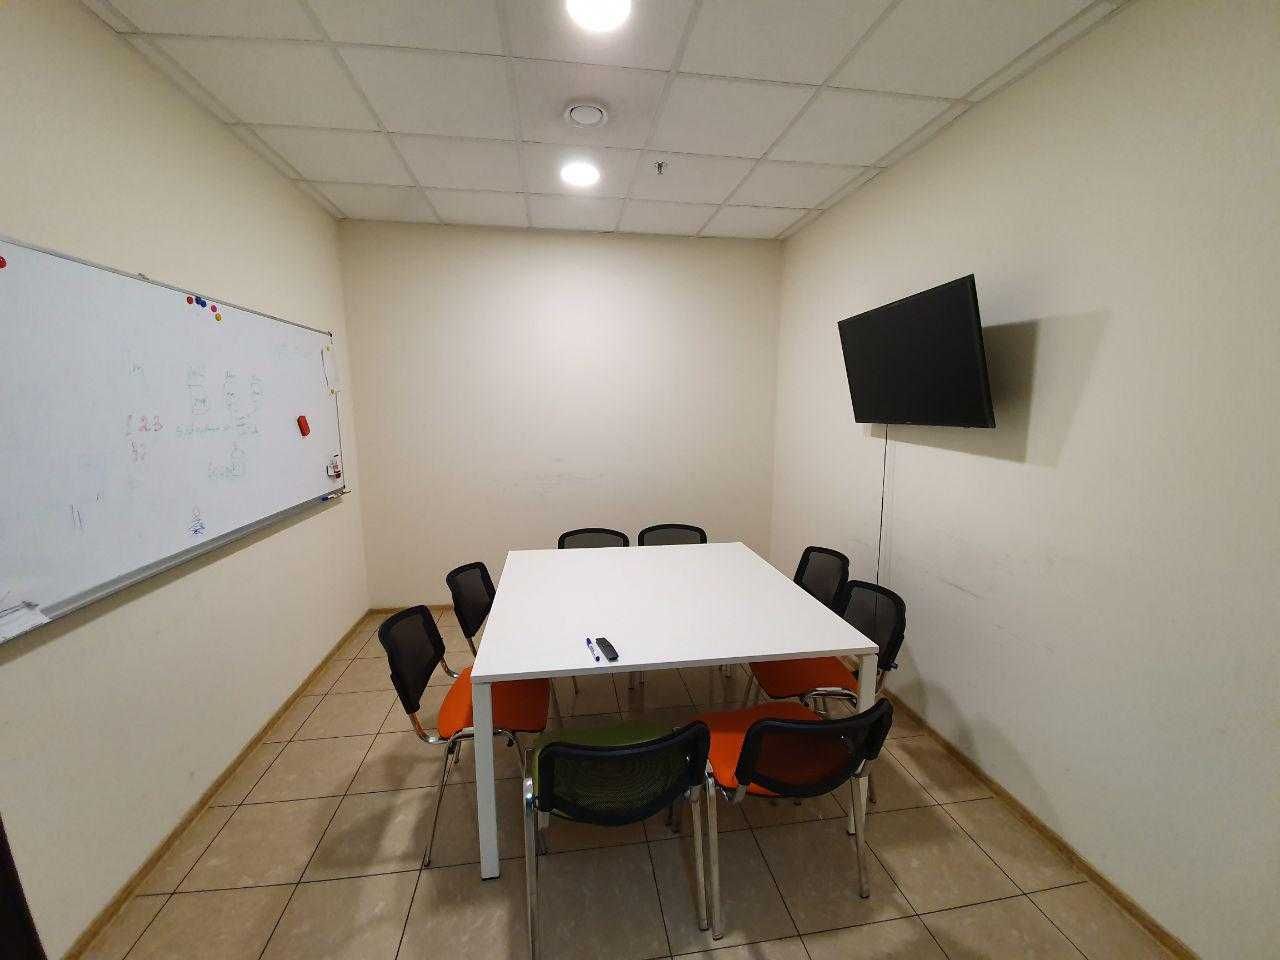 Аренда помещения под офис рядом с метро "23 Августа".